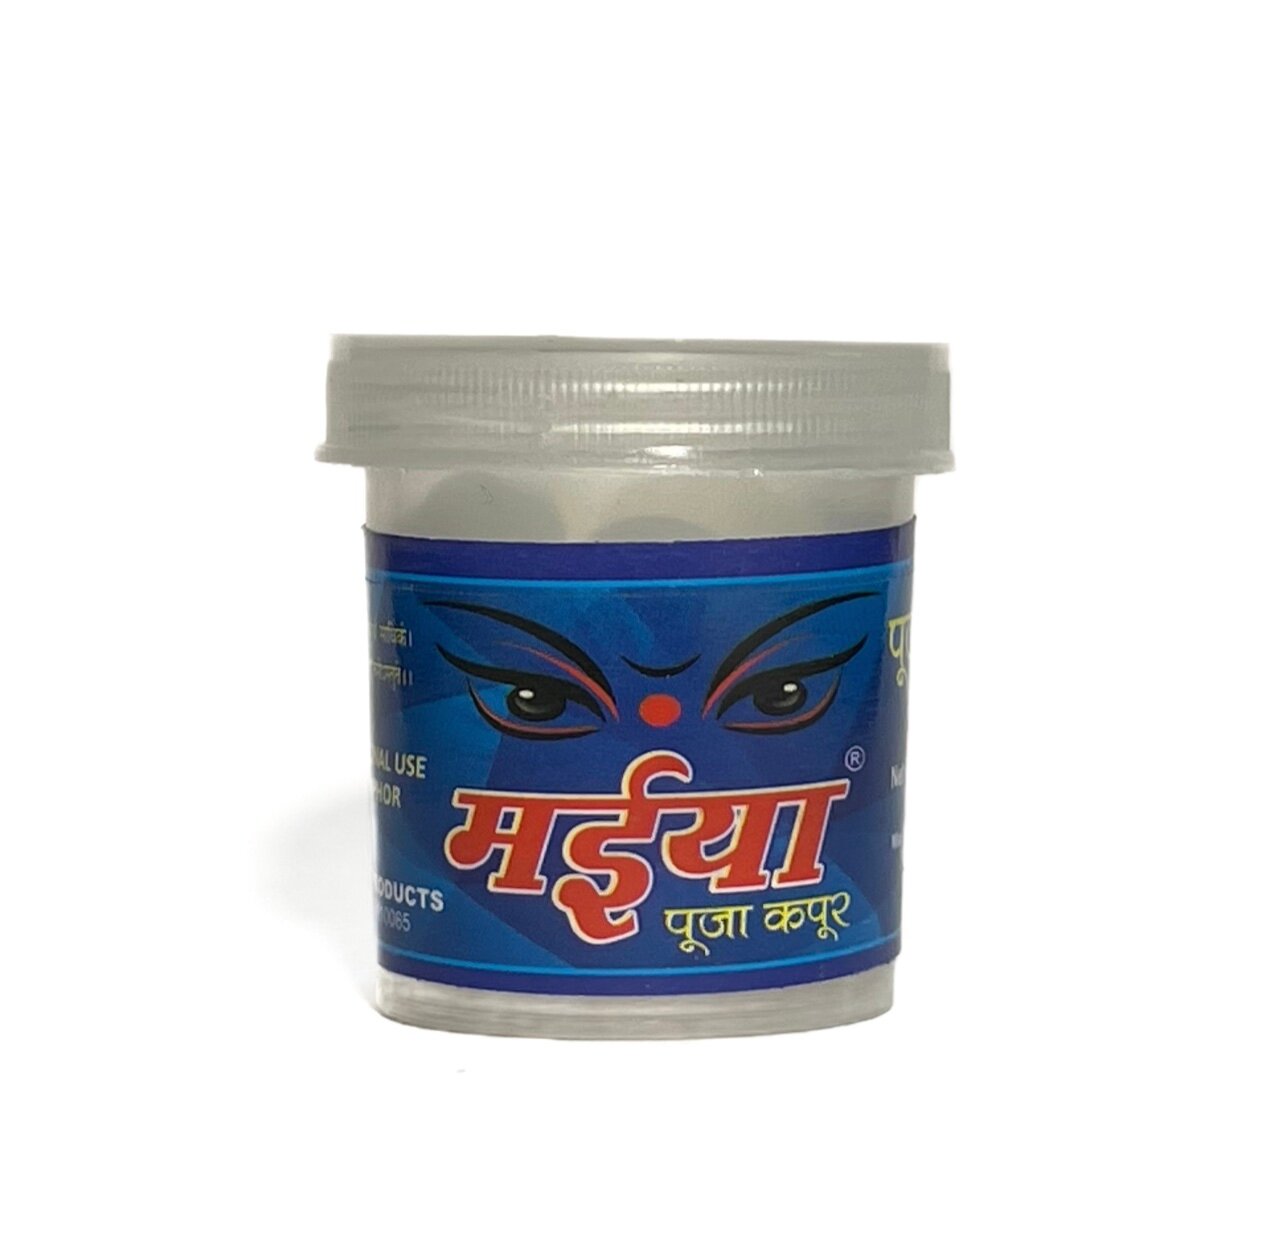 CAMPHOR Balaji Puja Products (синтетическая камфора таблетированная НЕ медицинская) 10 г.